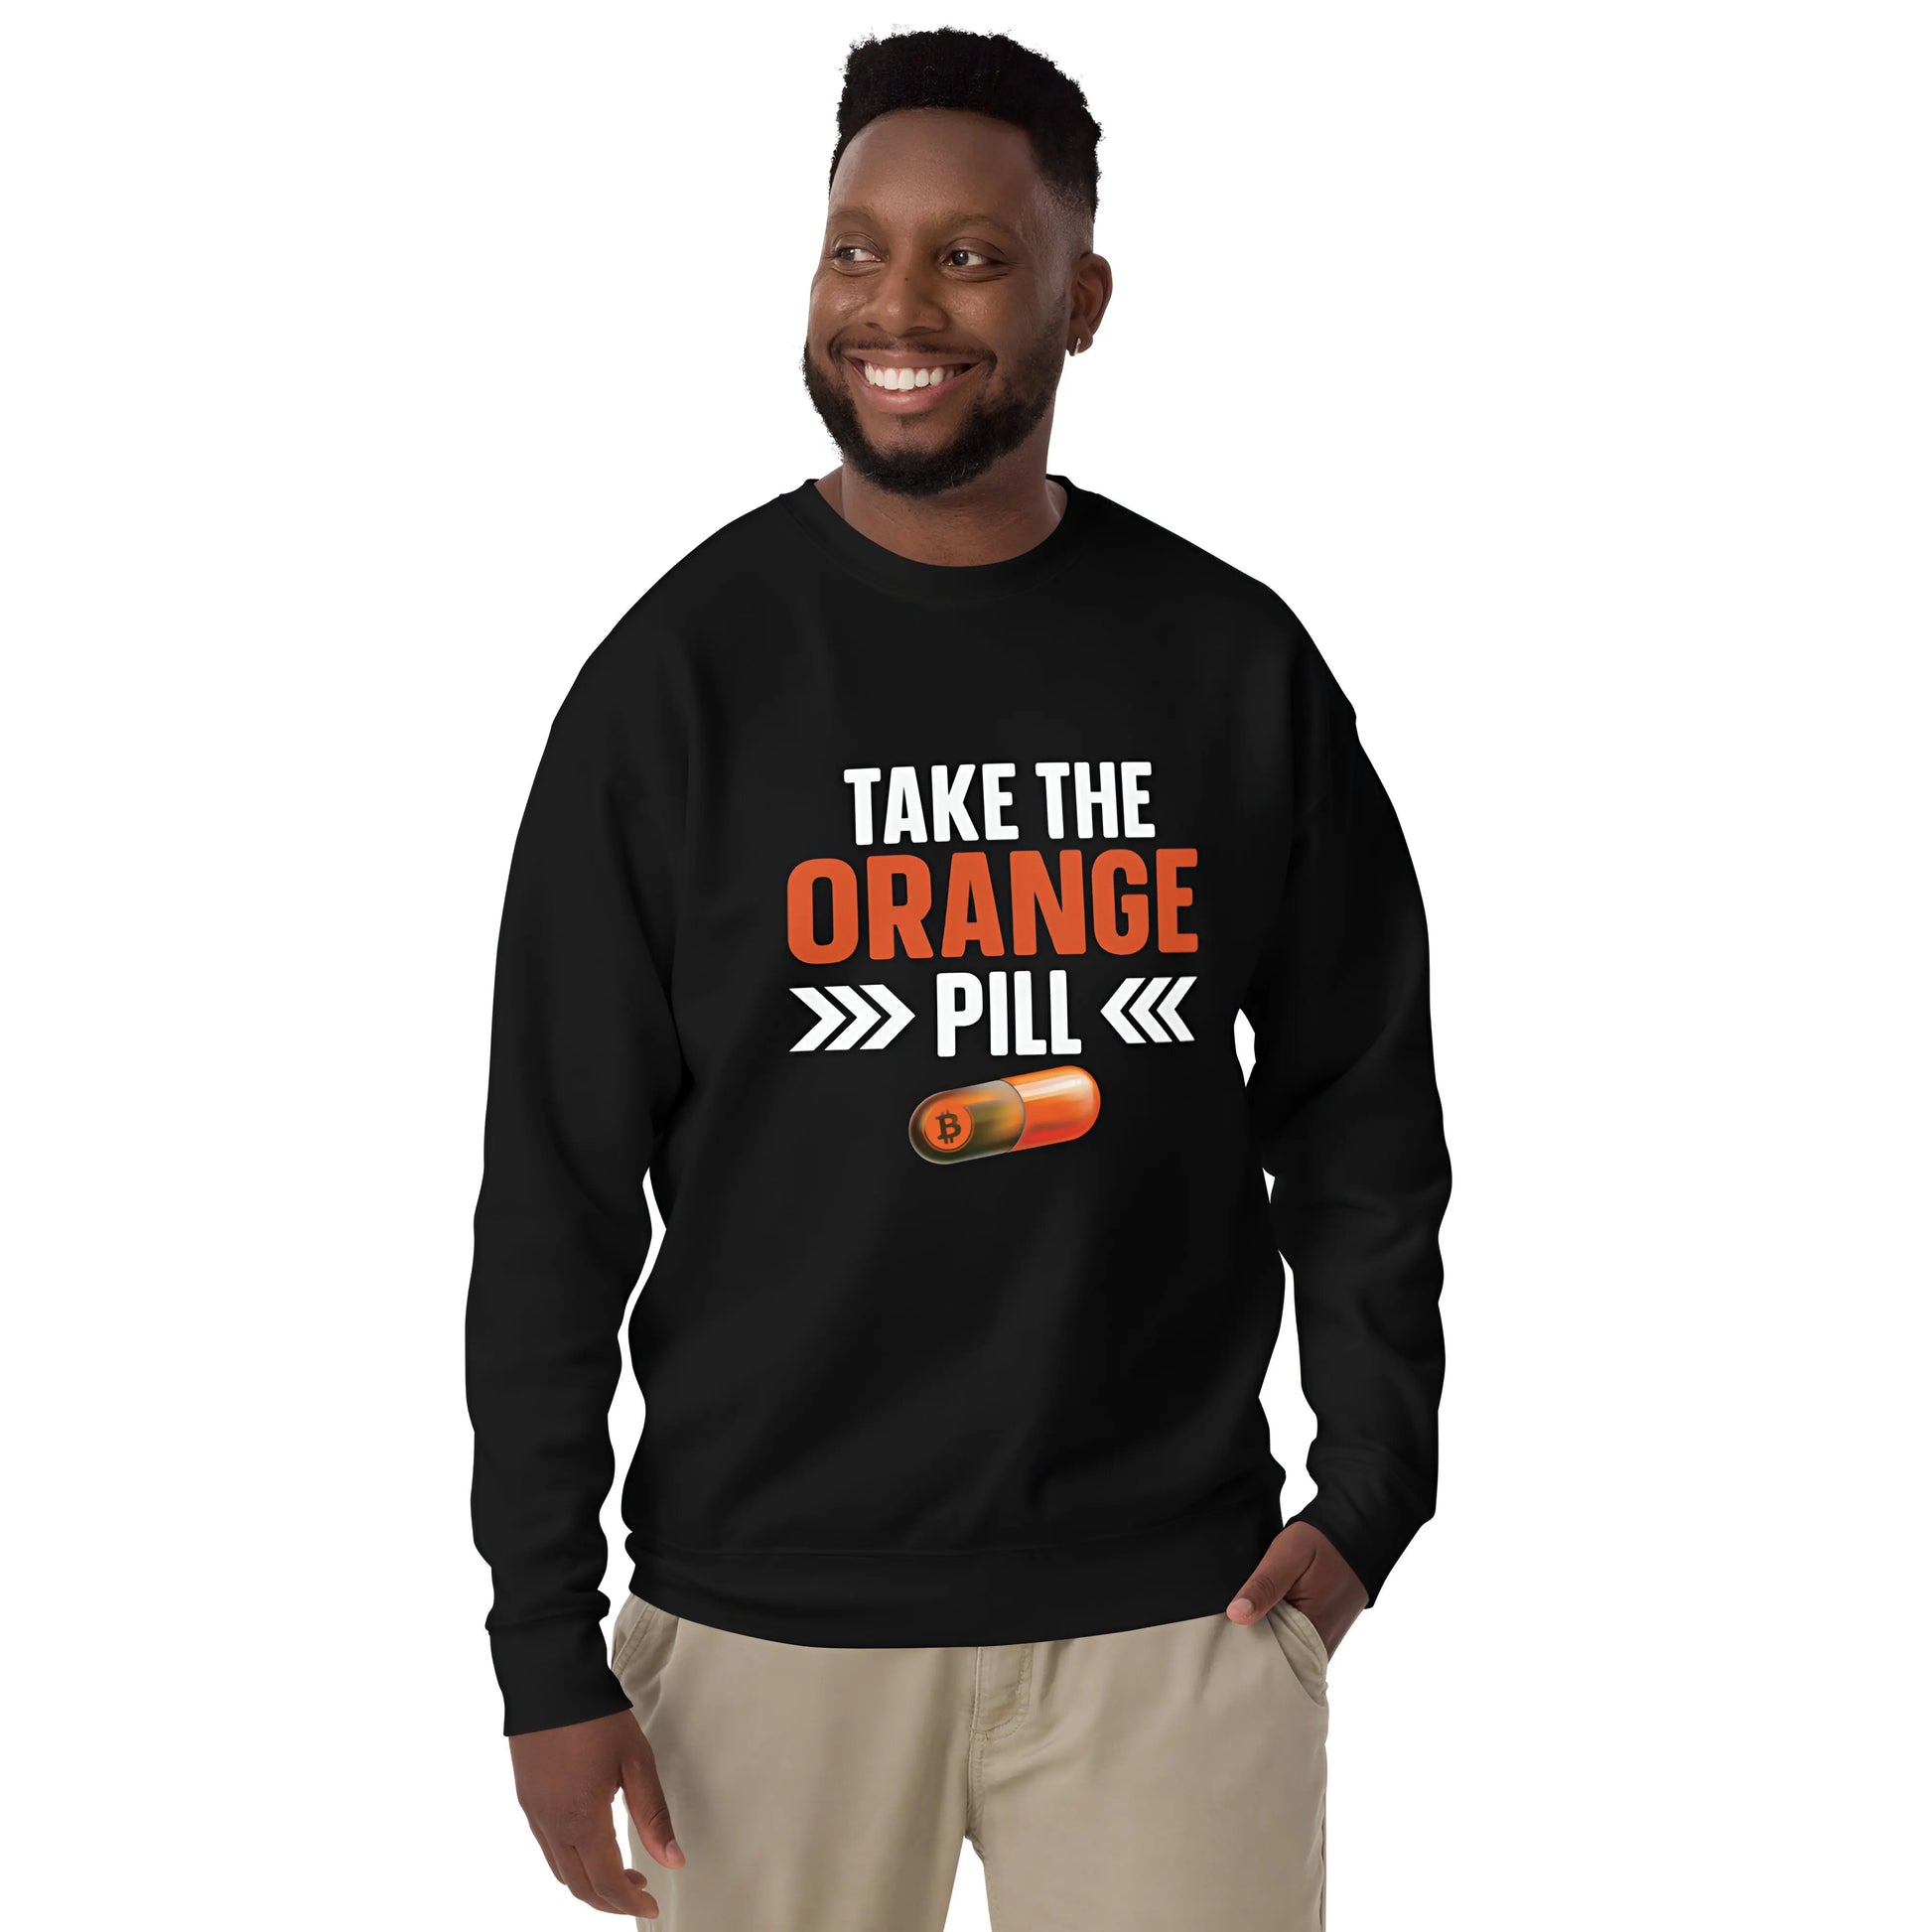 Take the Orange Pill - Premium Unisex Bitcoin Sweatshirt Black Color